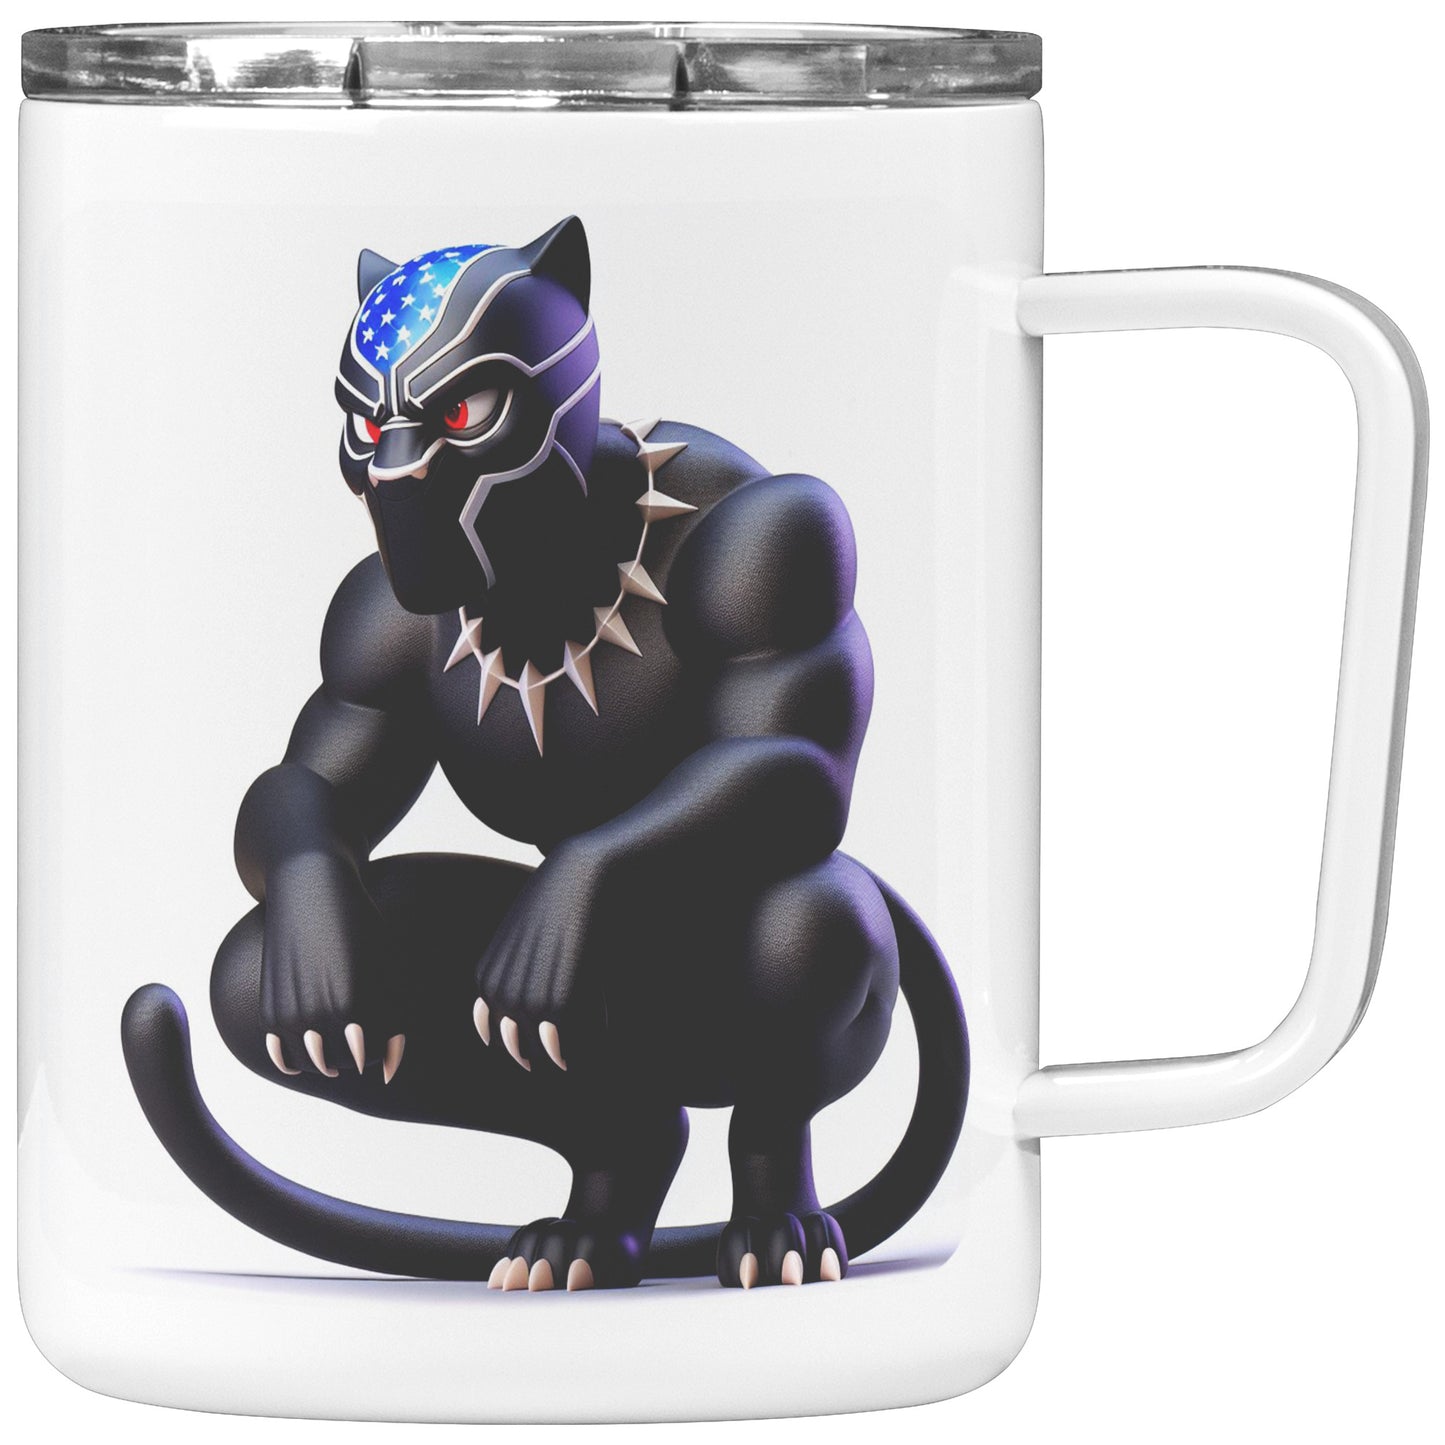 The Black Panther - Insulated Coffee Mug #39